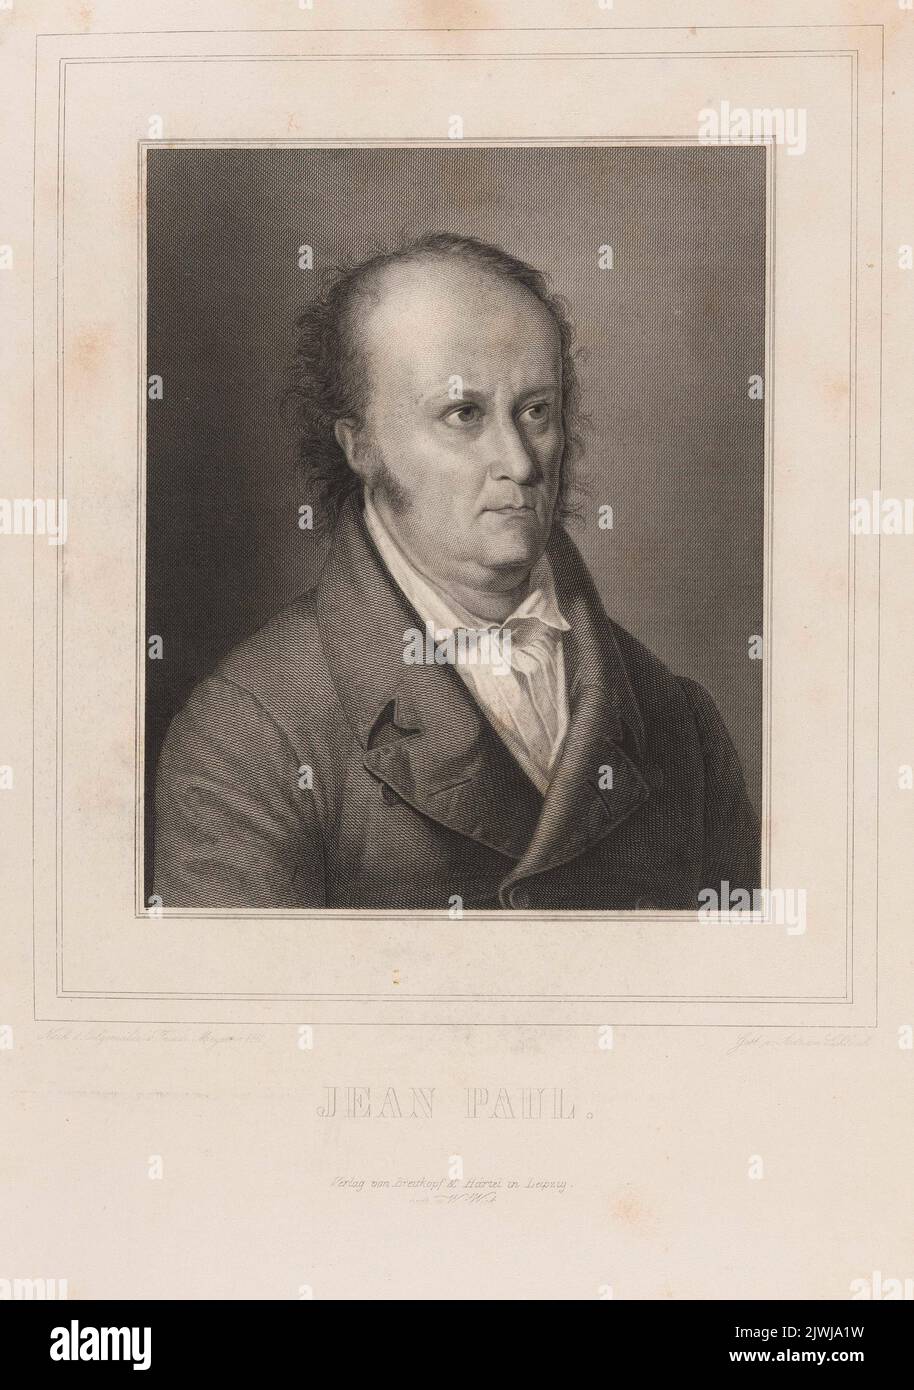 Portrait of Jean Paul. Wick, Wendelin (Monachium ; drukarnia ; fl. ca 1842-1860), printing house, Schleich, Adrian (1812-1894), graphic artist, Breitkopf & Härtel (Lipsk ; wydawnictwo ; 1818-1945), publishing house, Graff Anton (1736-1813), painter Stock Photo